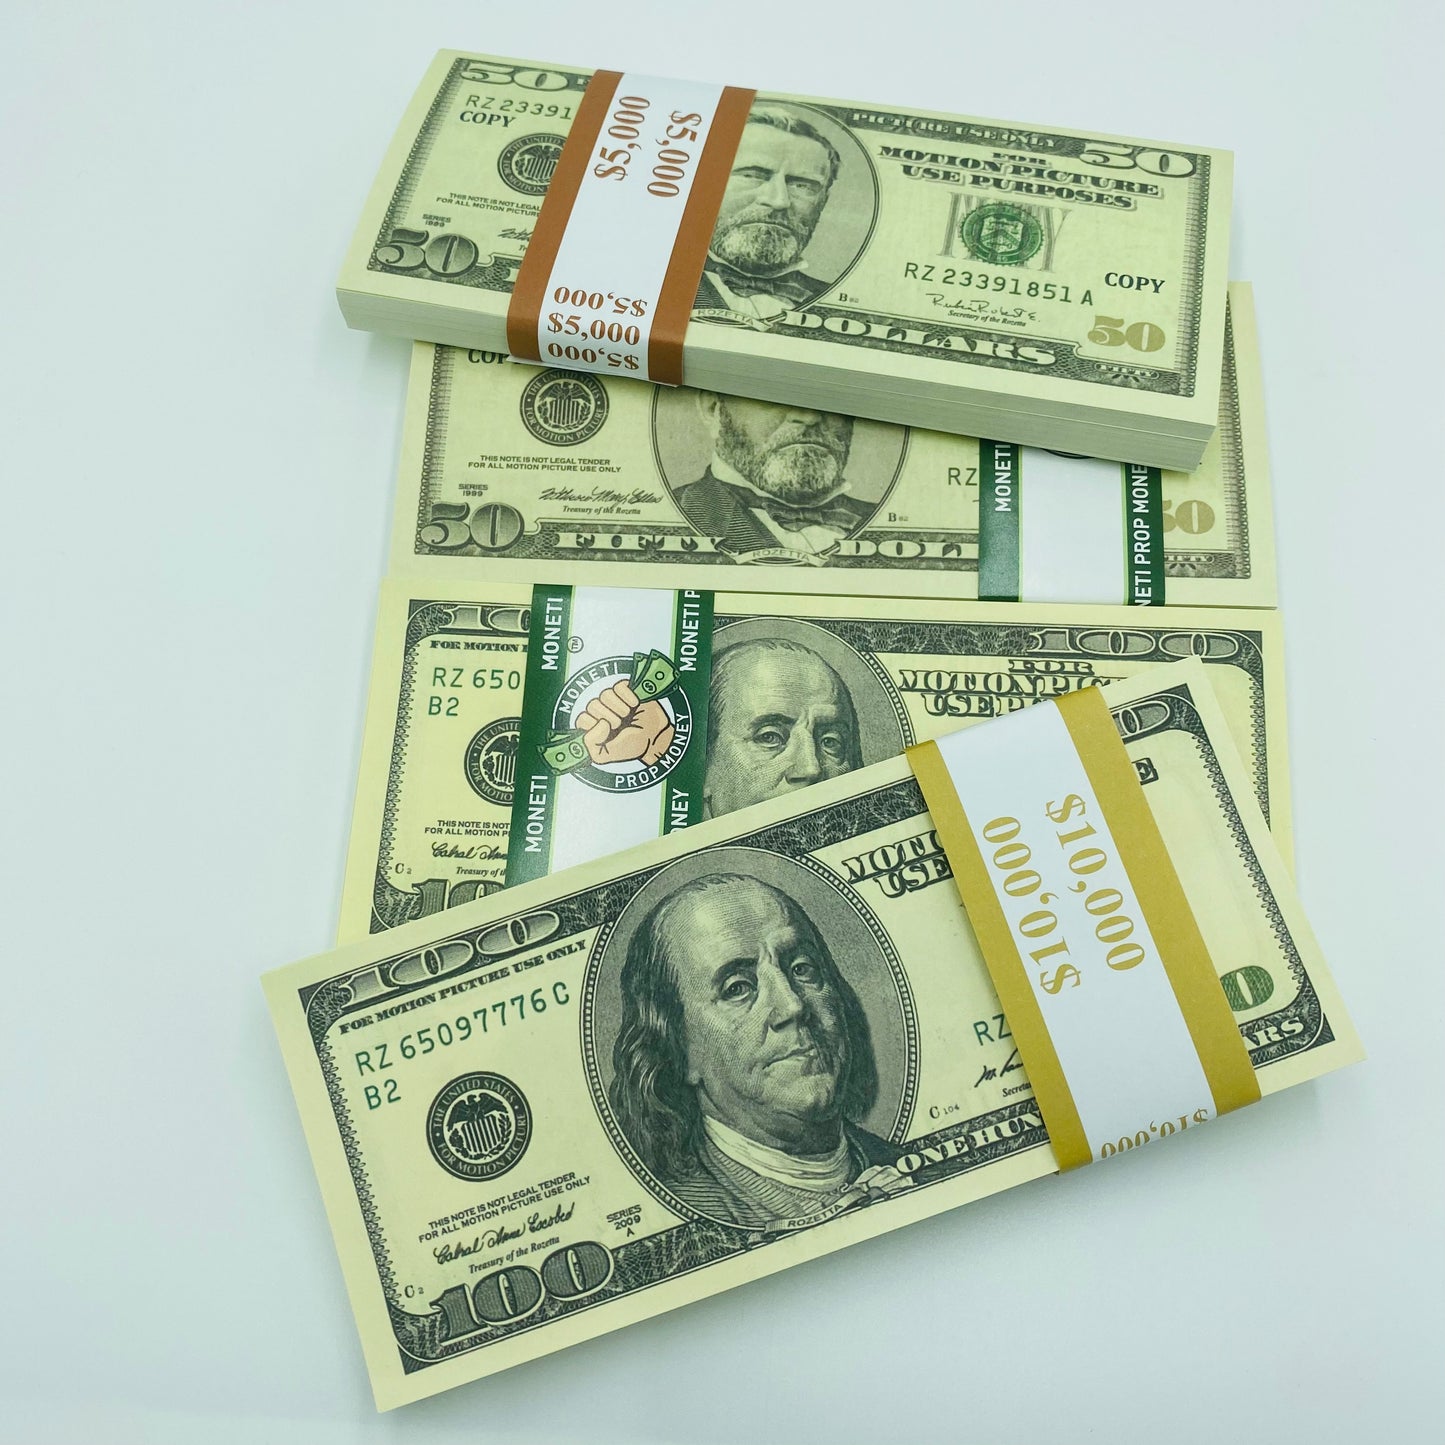 Old US Dollar Prop Money 100 pcs Mix $100 $50 Fake Money 2 Side Looks Real